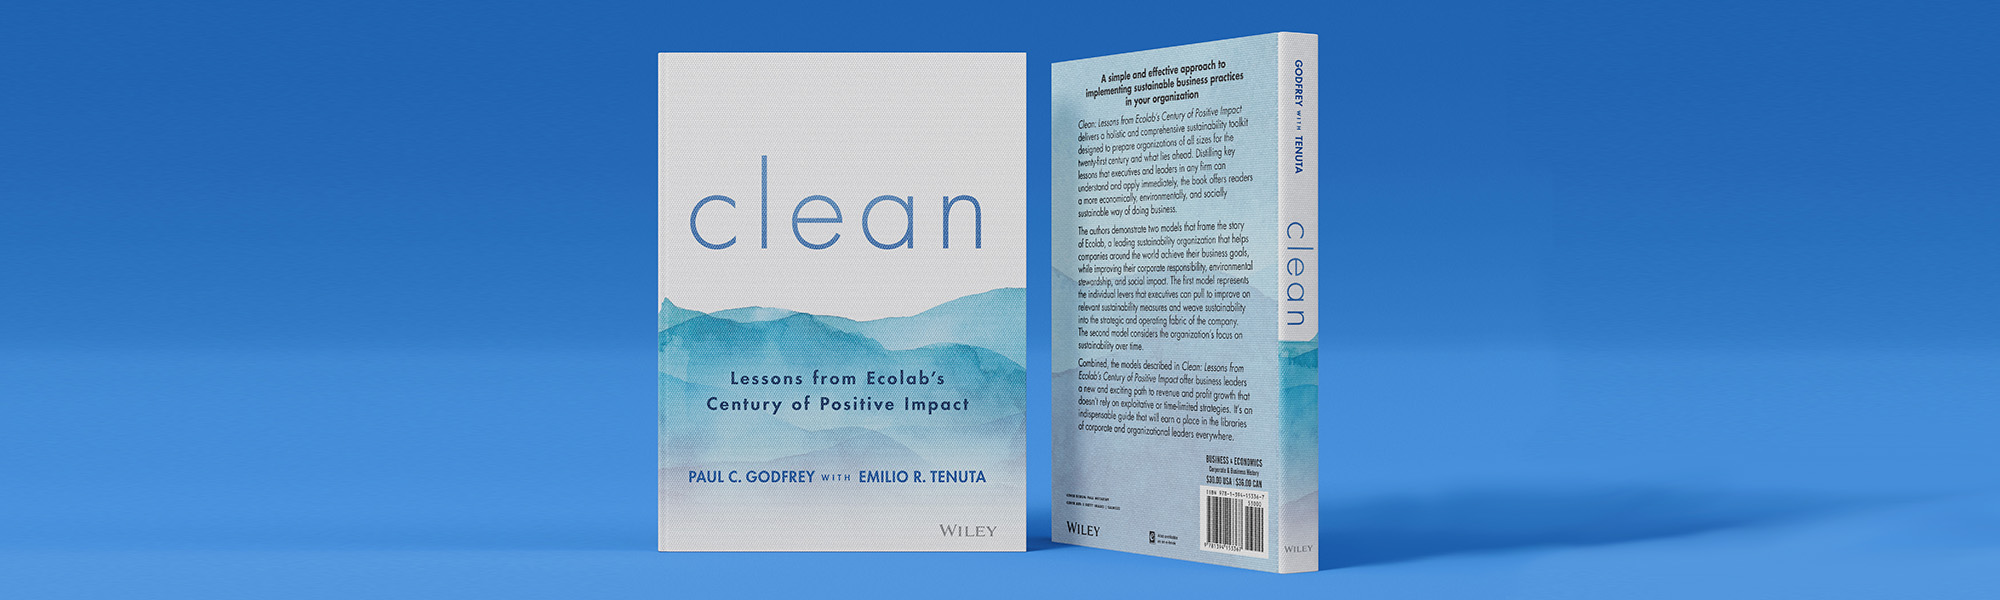 "Clean" book cover